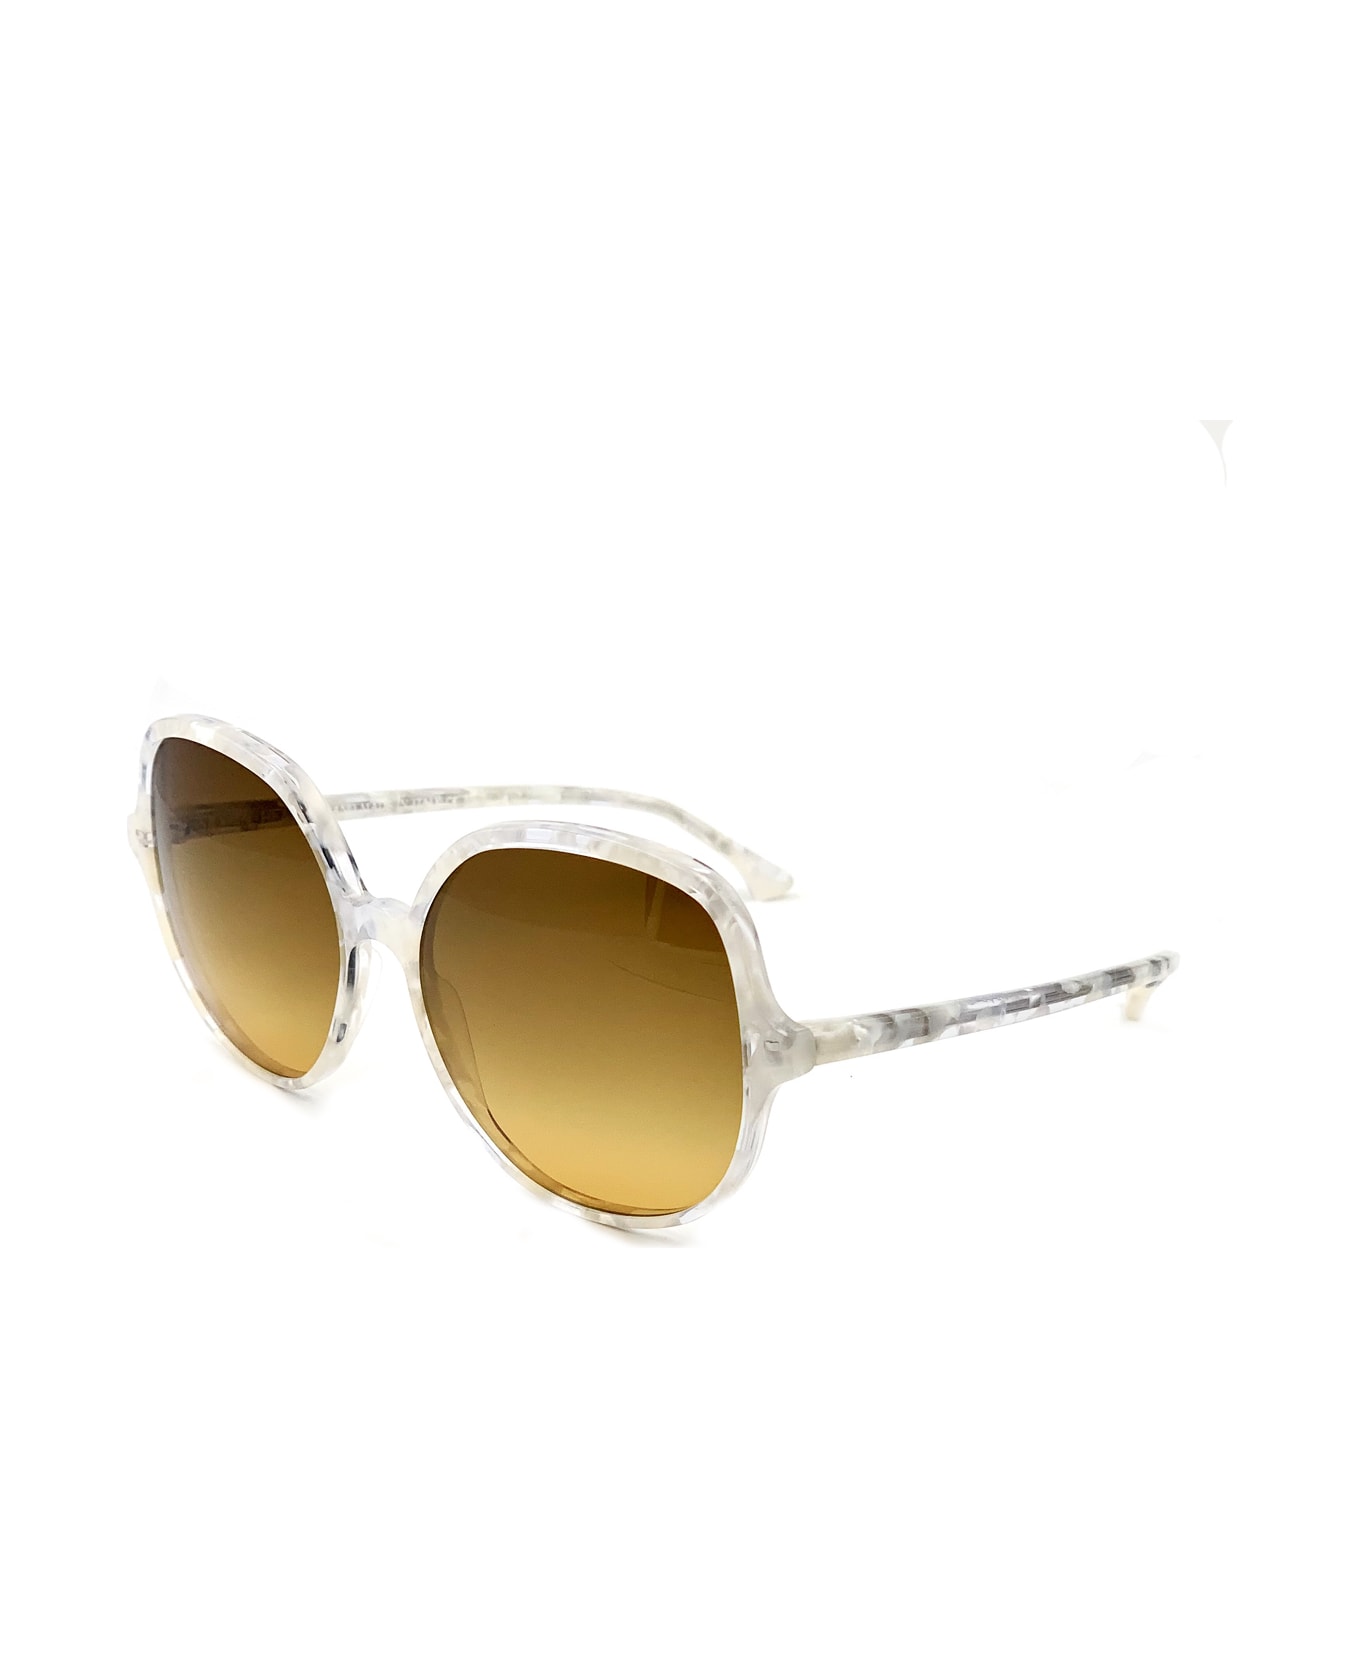 Silvian Heach Drag C661 Sunglasses - Avorio サングラス